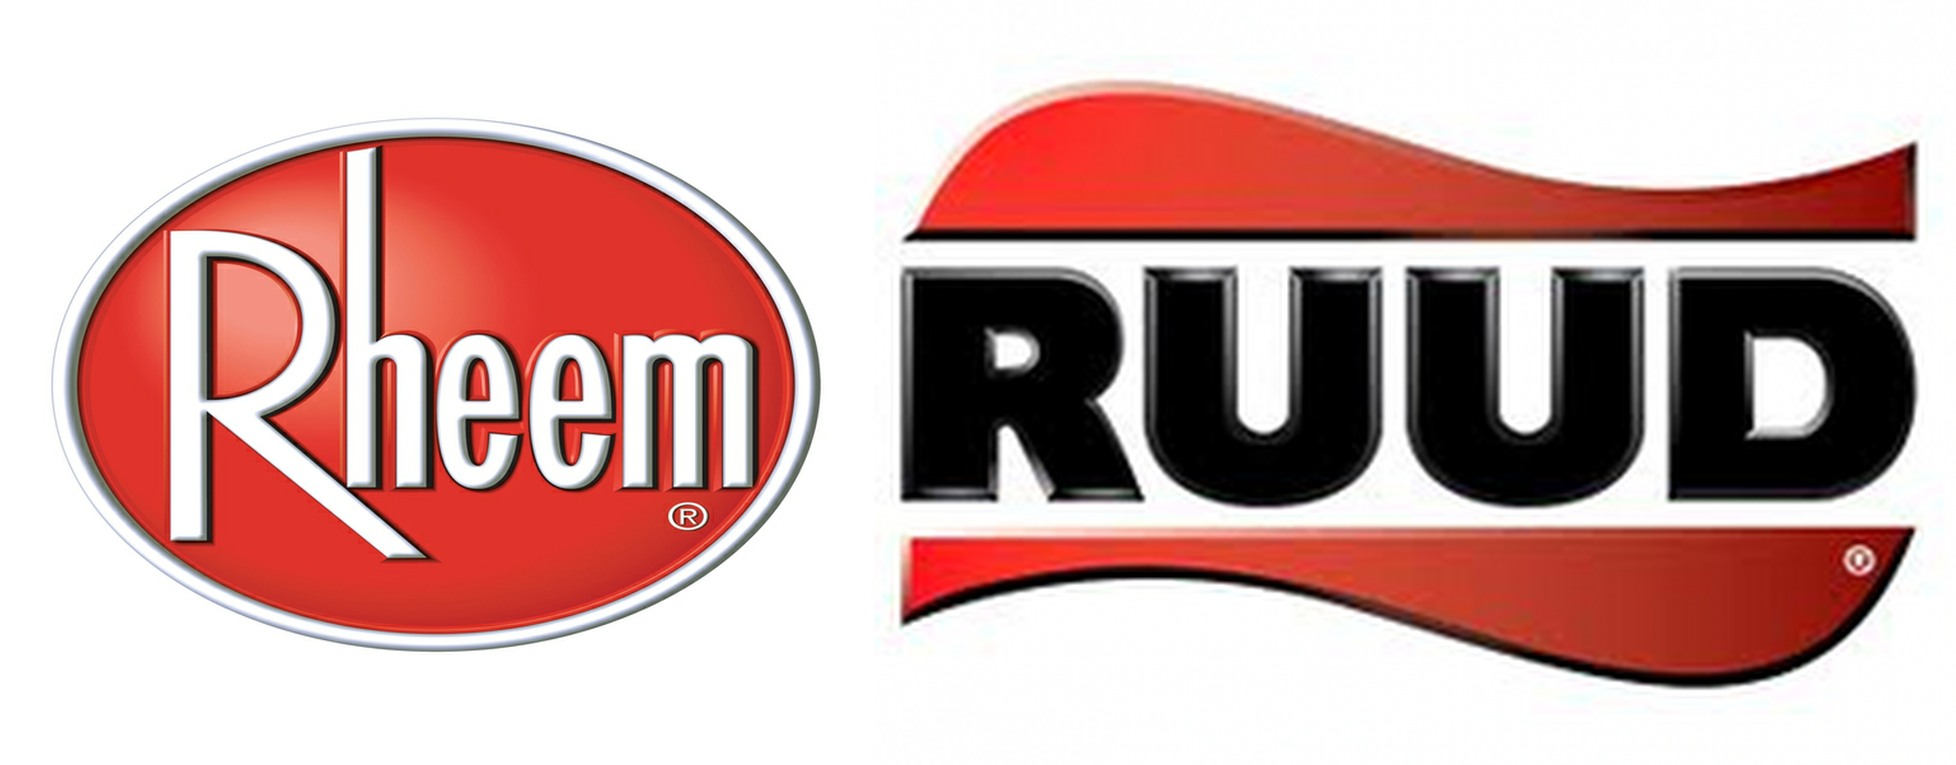 rheem-ruud-logo.jpg